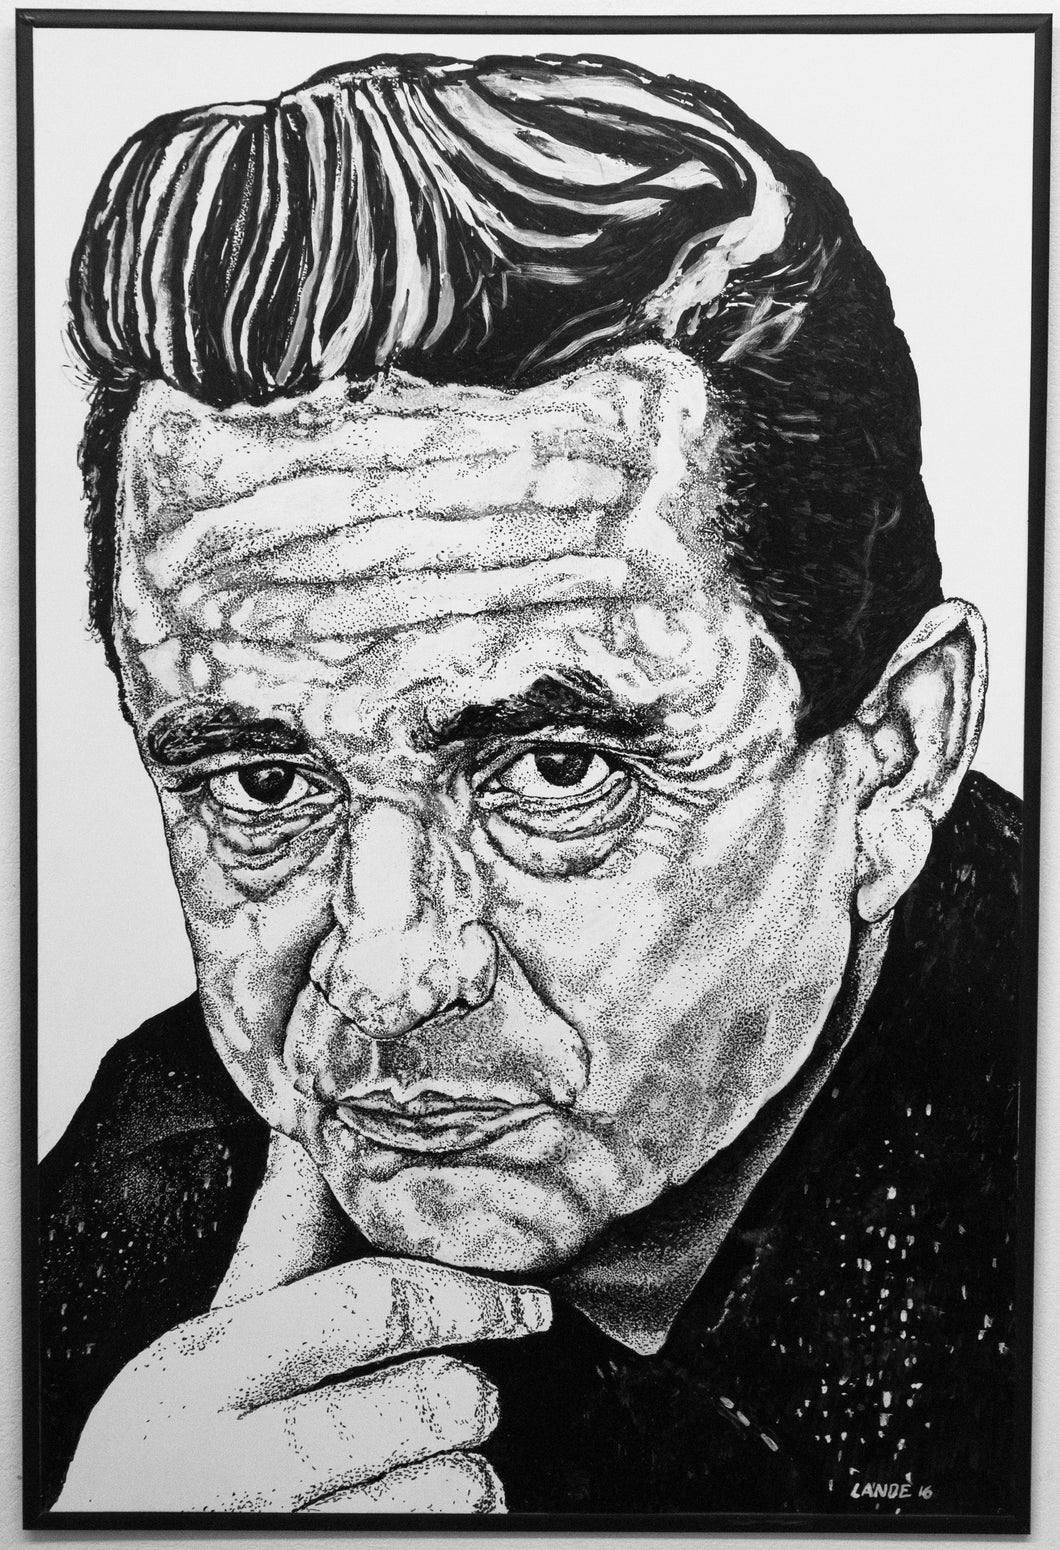 Johnny Cash (1932 - 2003)